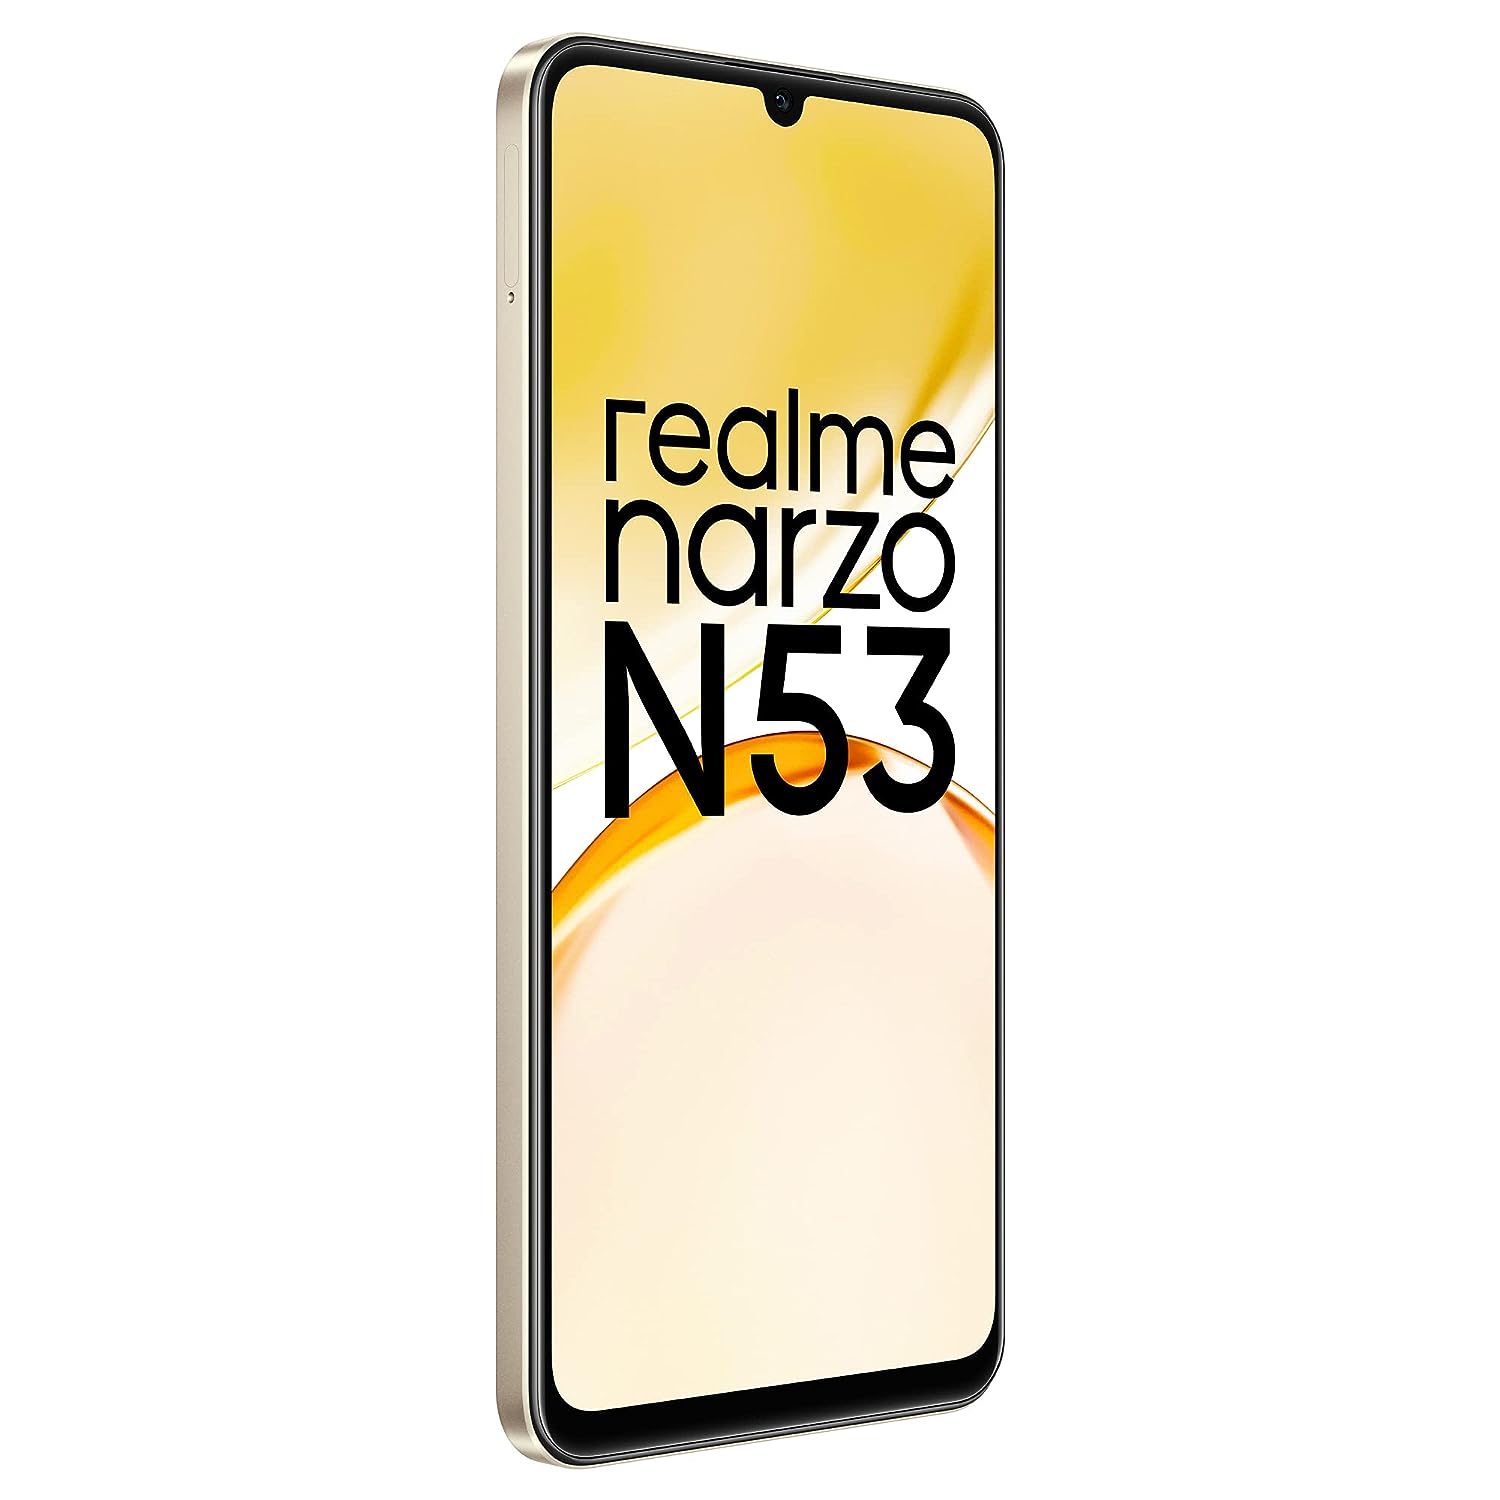 realme narzo N53 (Feather Gold, 128GB) (6GB)